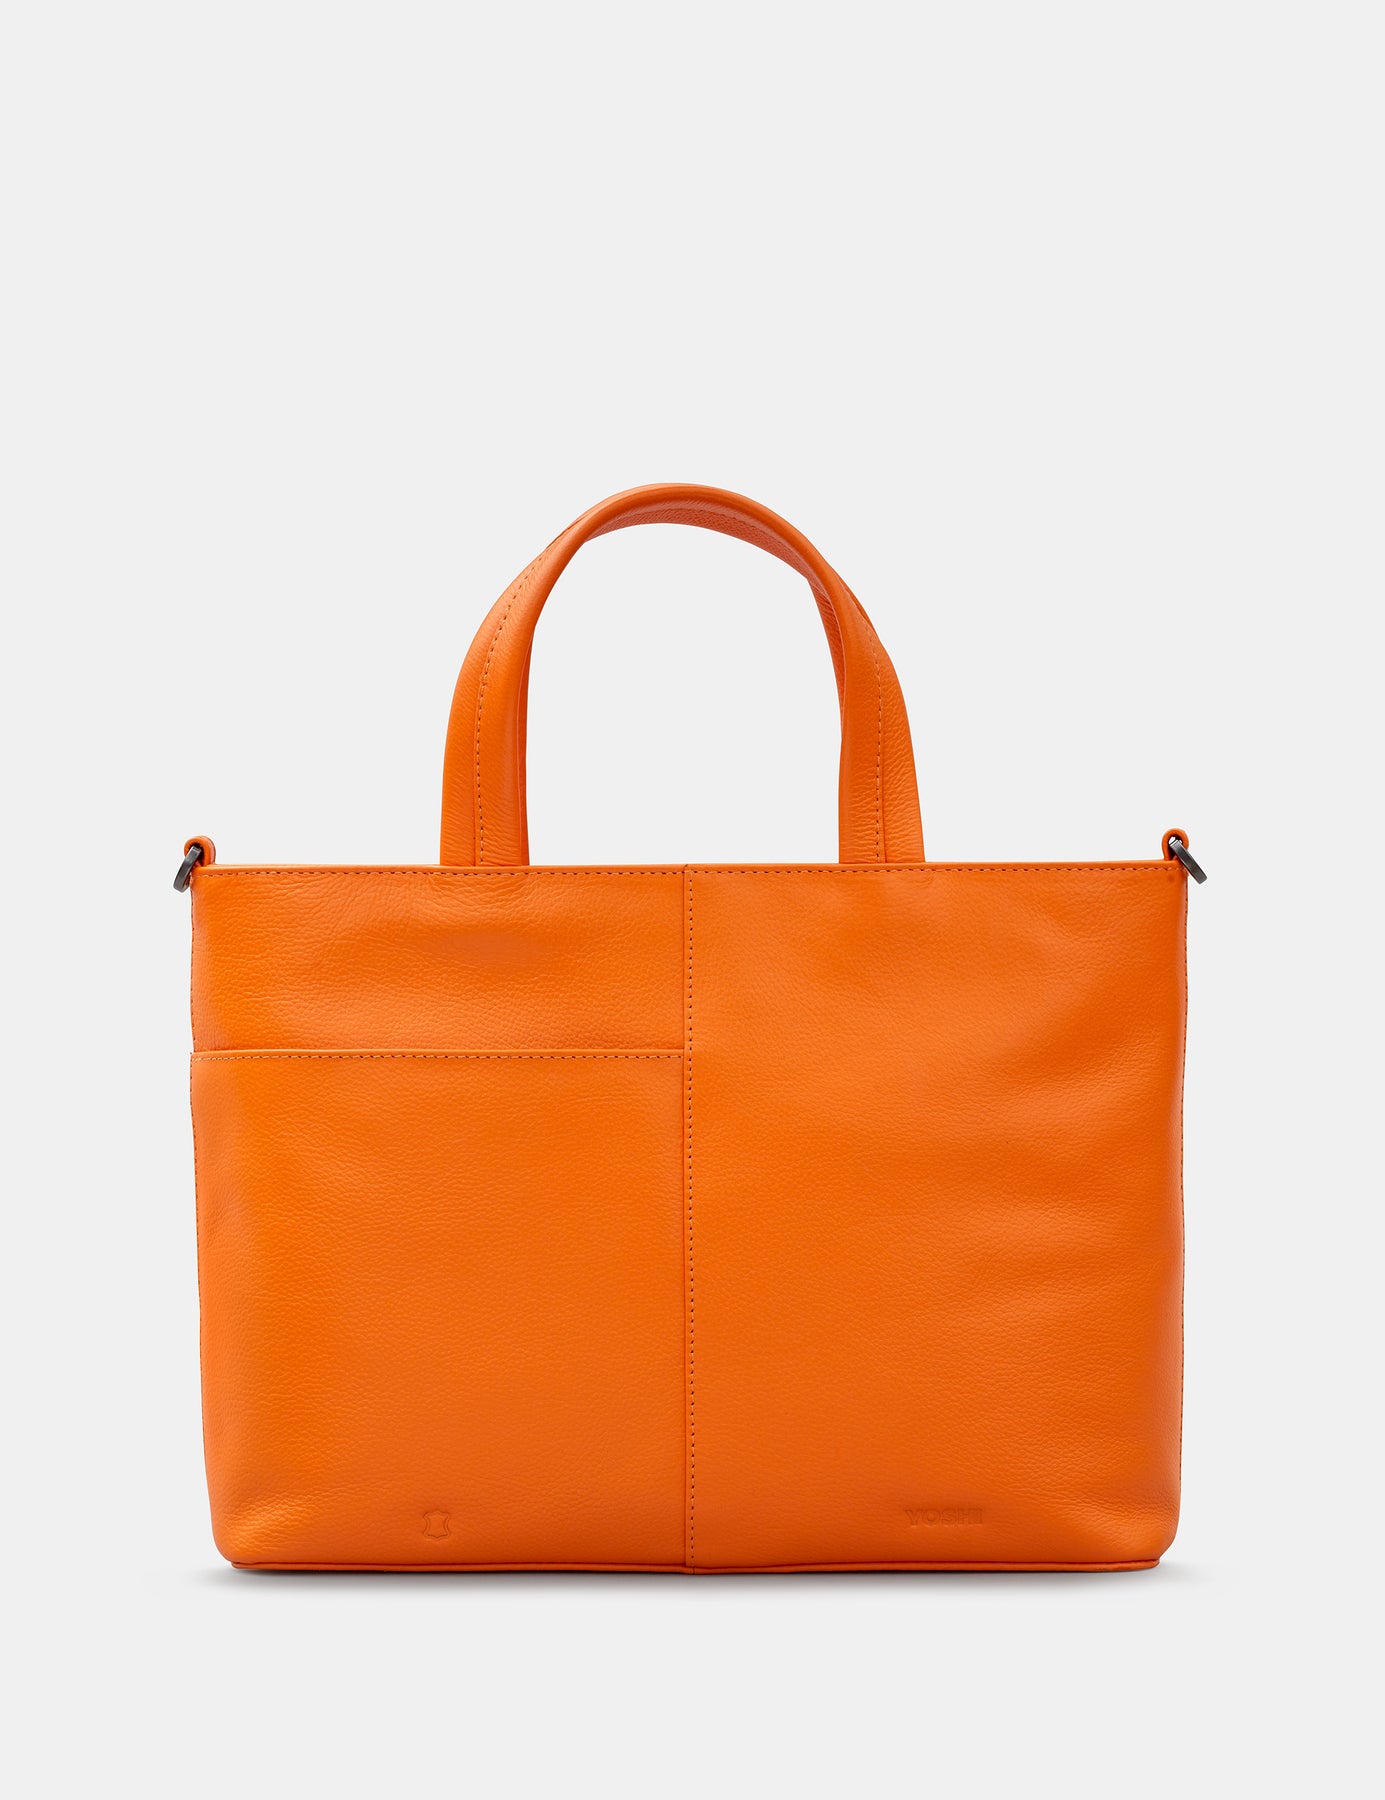 Leather Handbags, Designer Leather Bags & Leather Purses